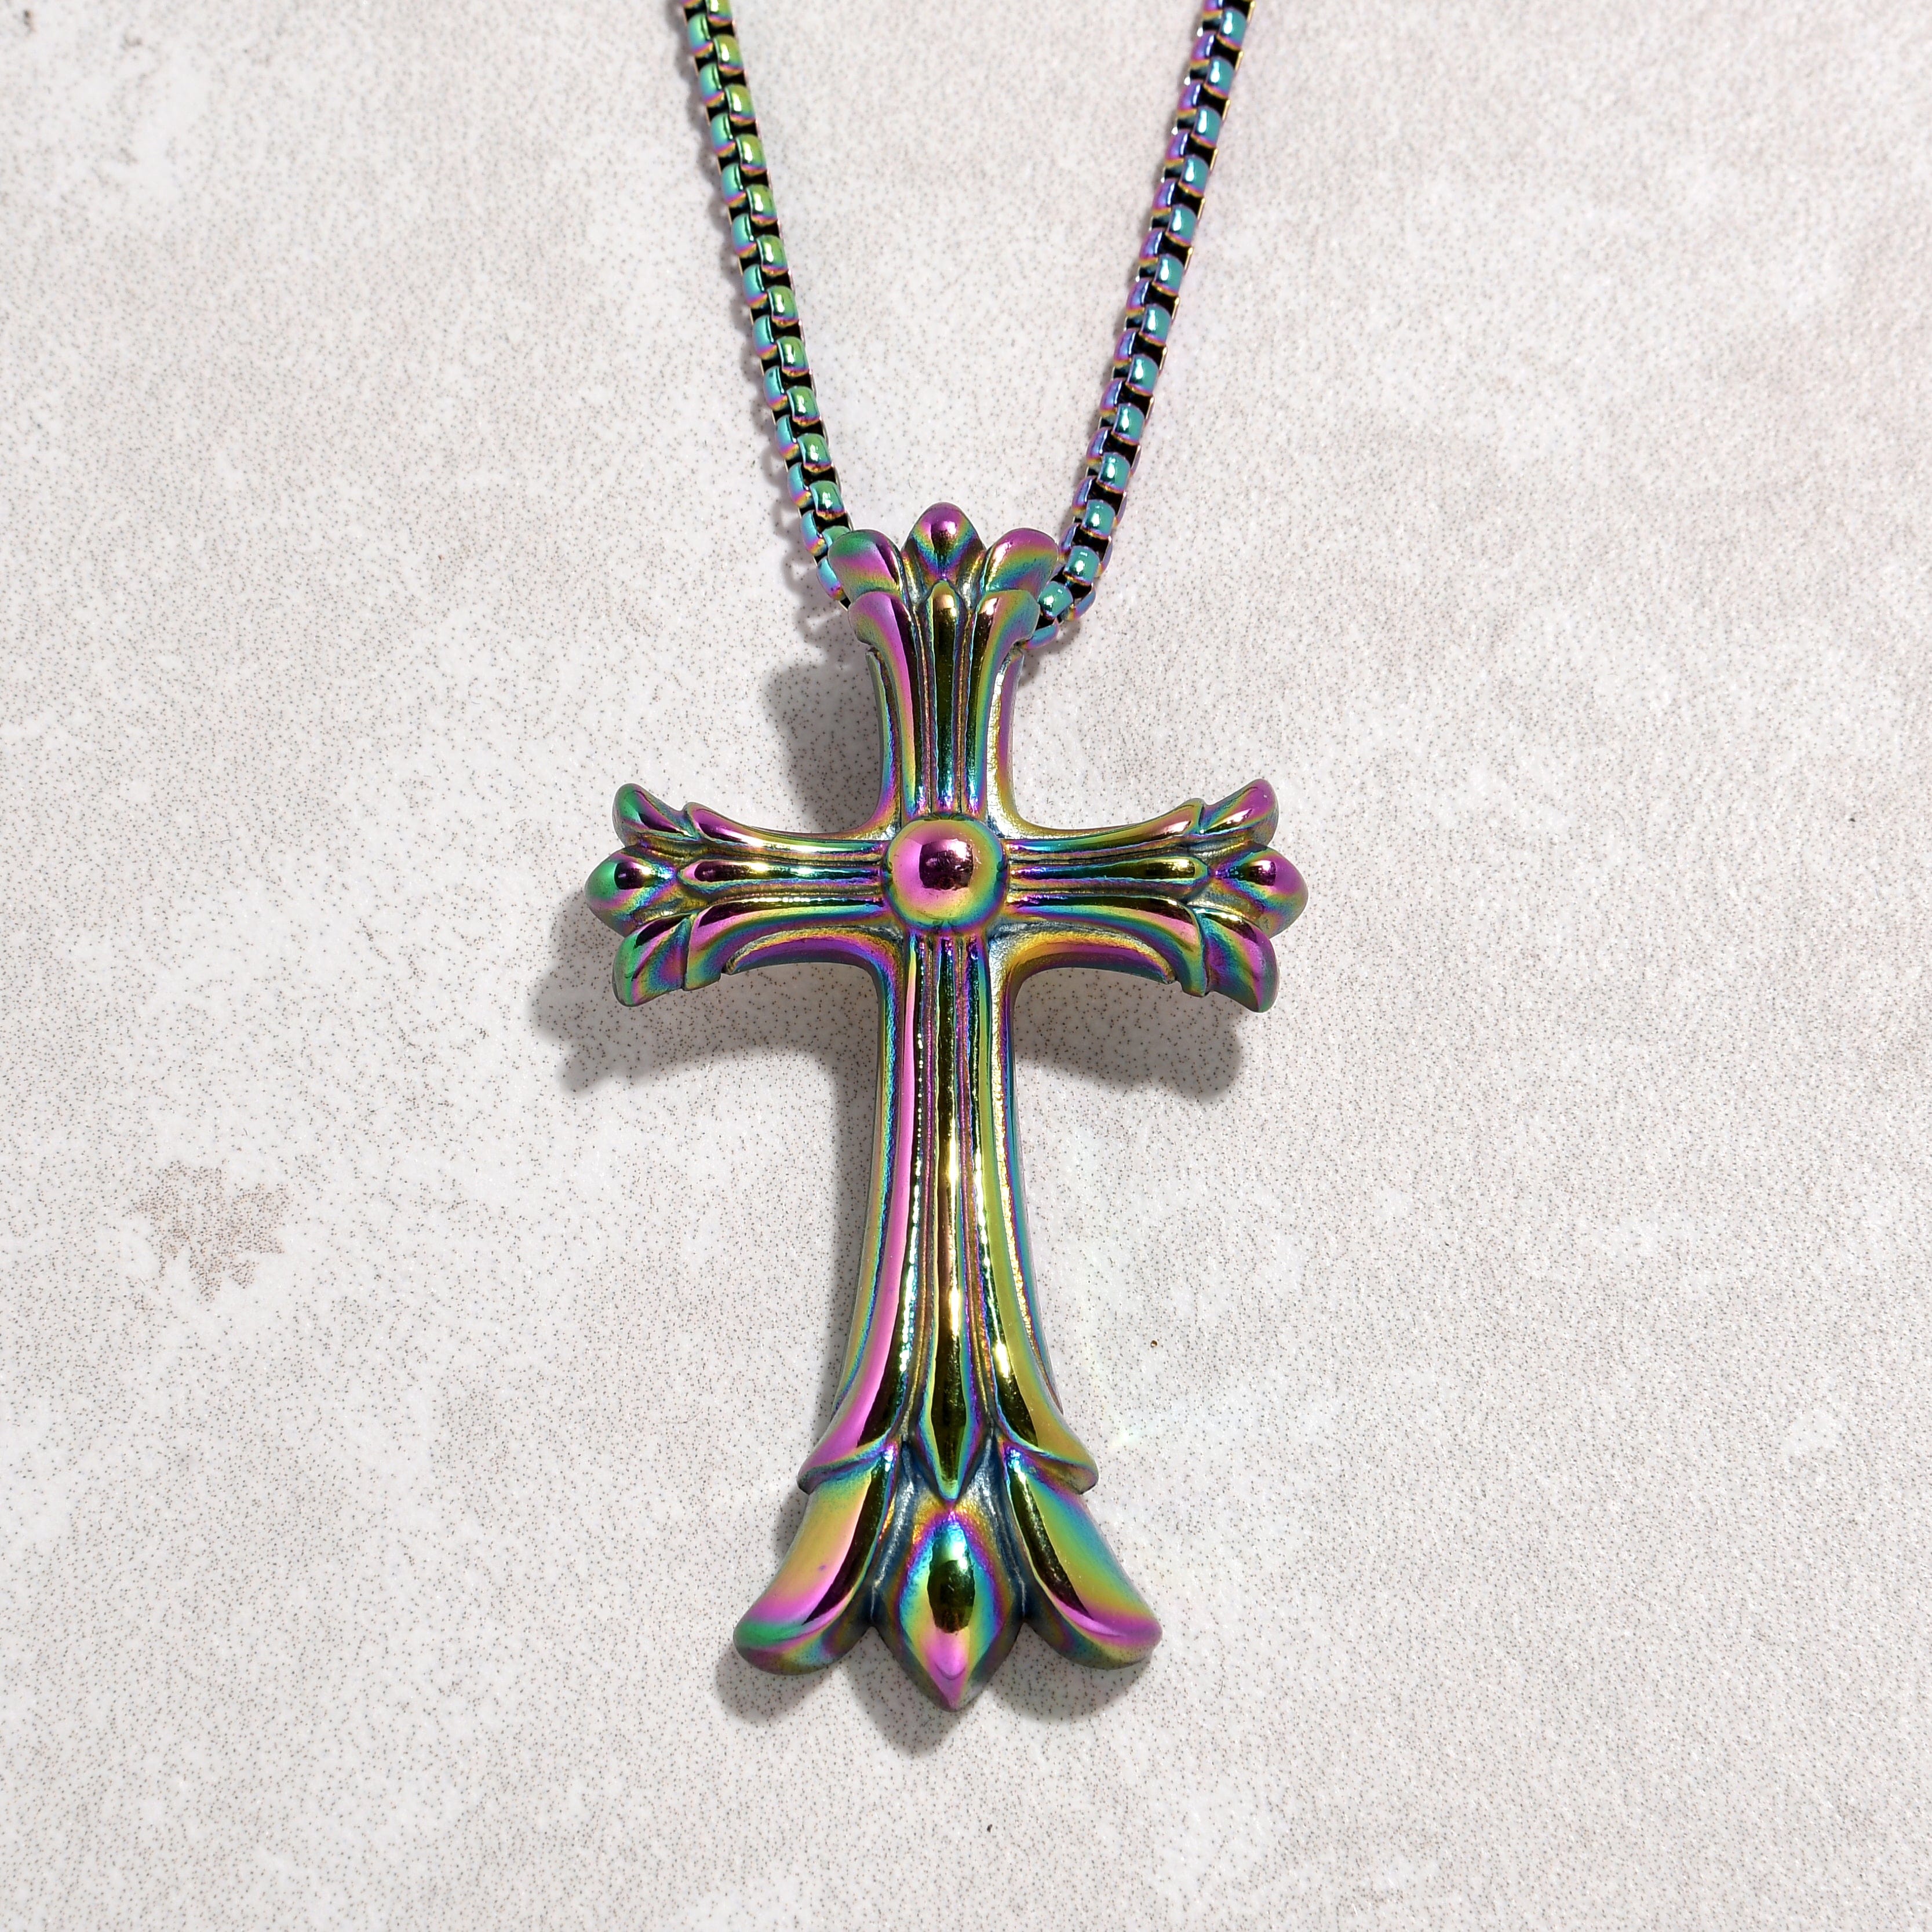 Kalifano Steel Hearts Jewelry Aurora Borealis Cross Steel Hearts Necklace SHN530-AB